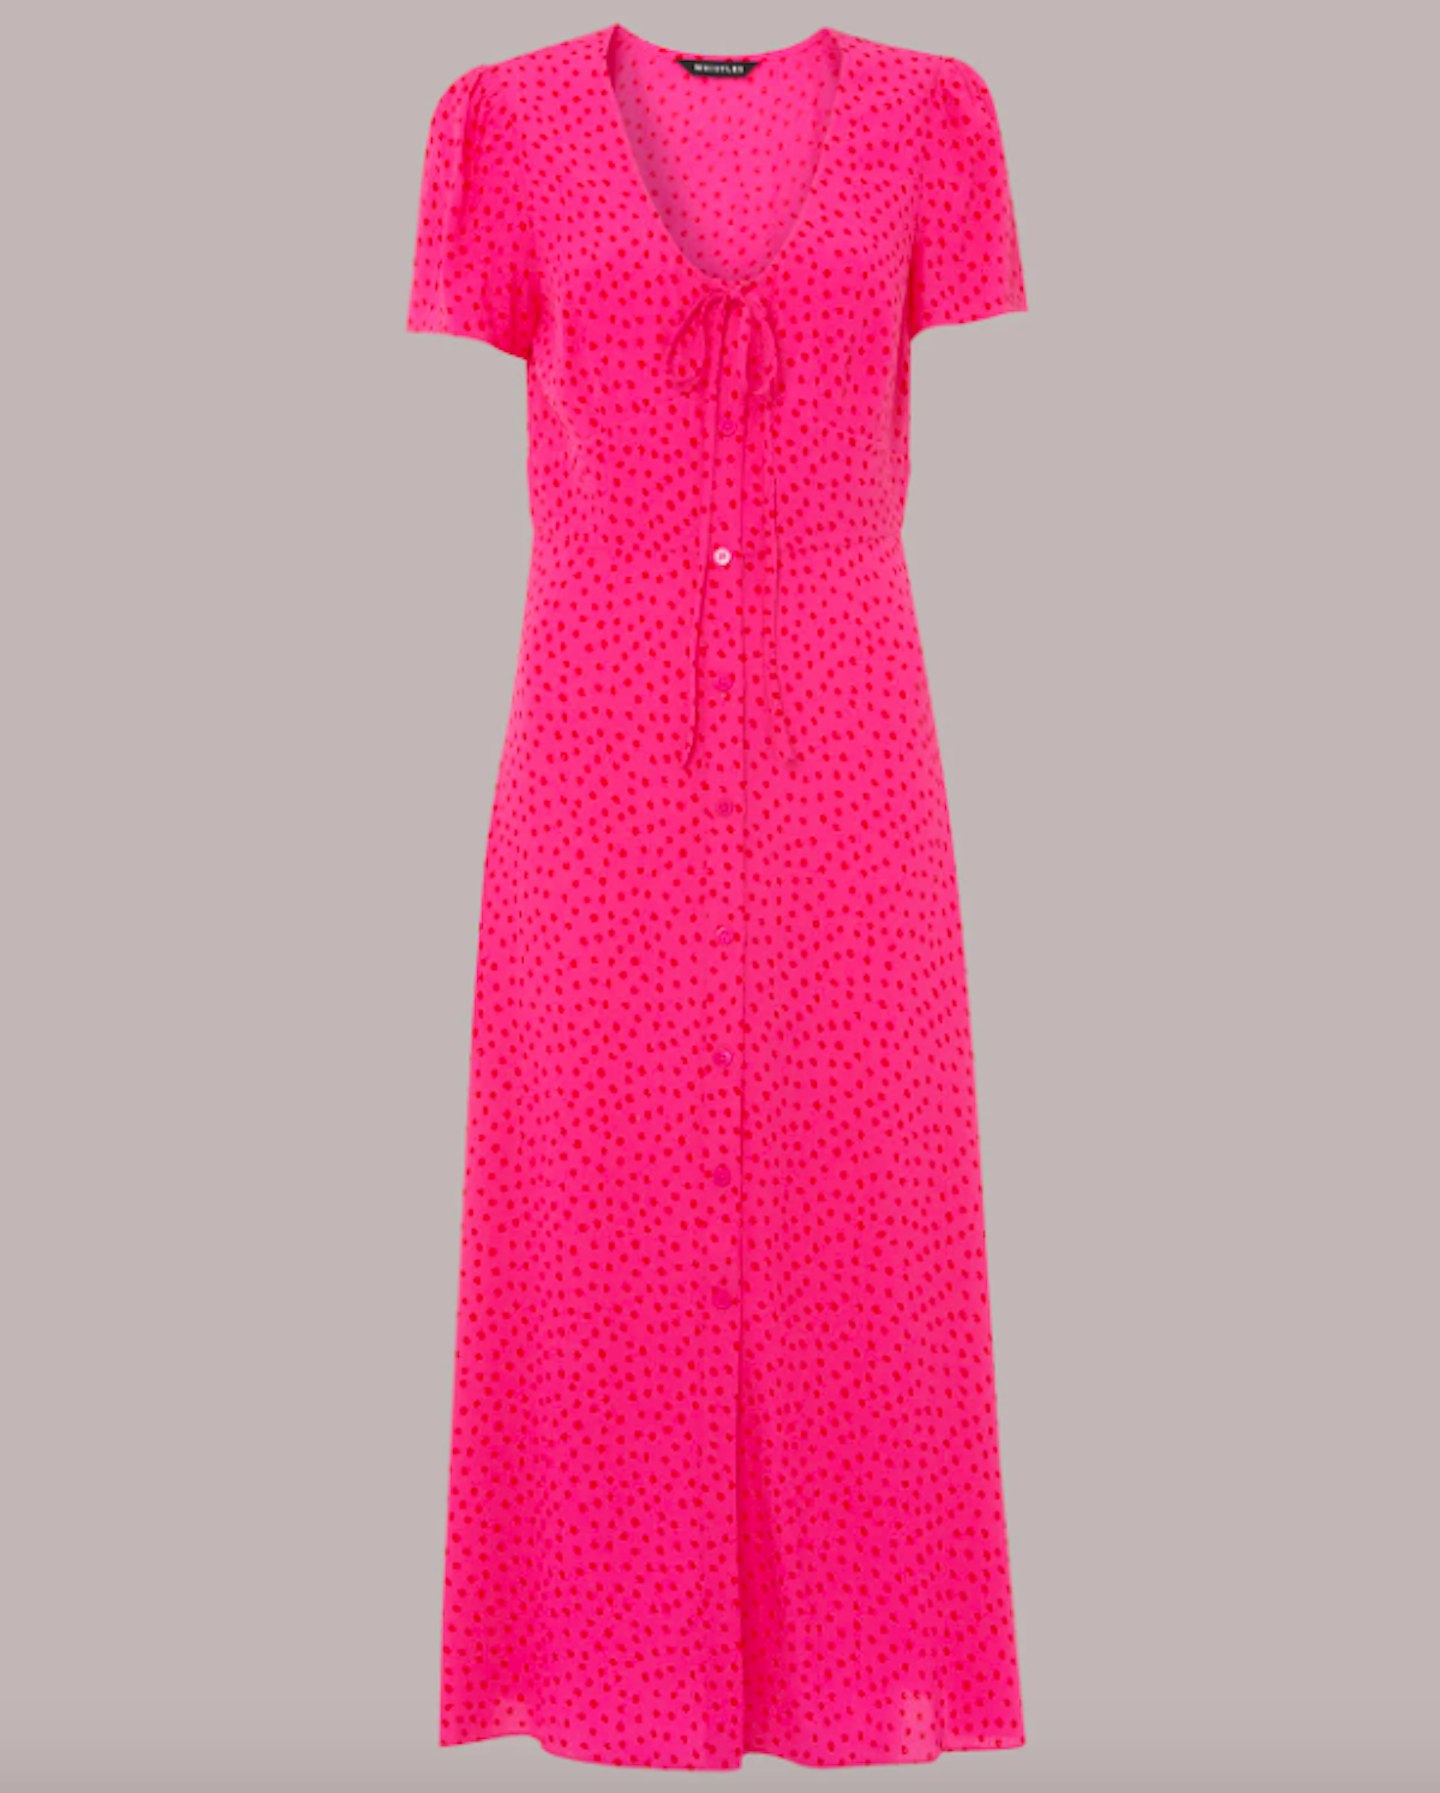 Whistles, Heidi Spot Print Dress, £149